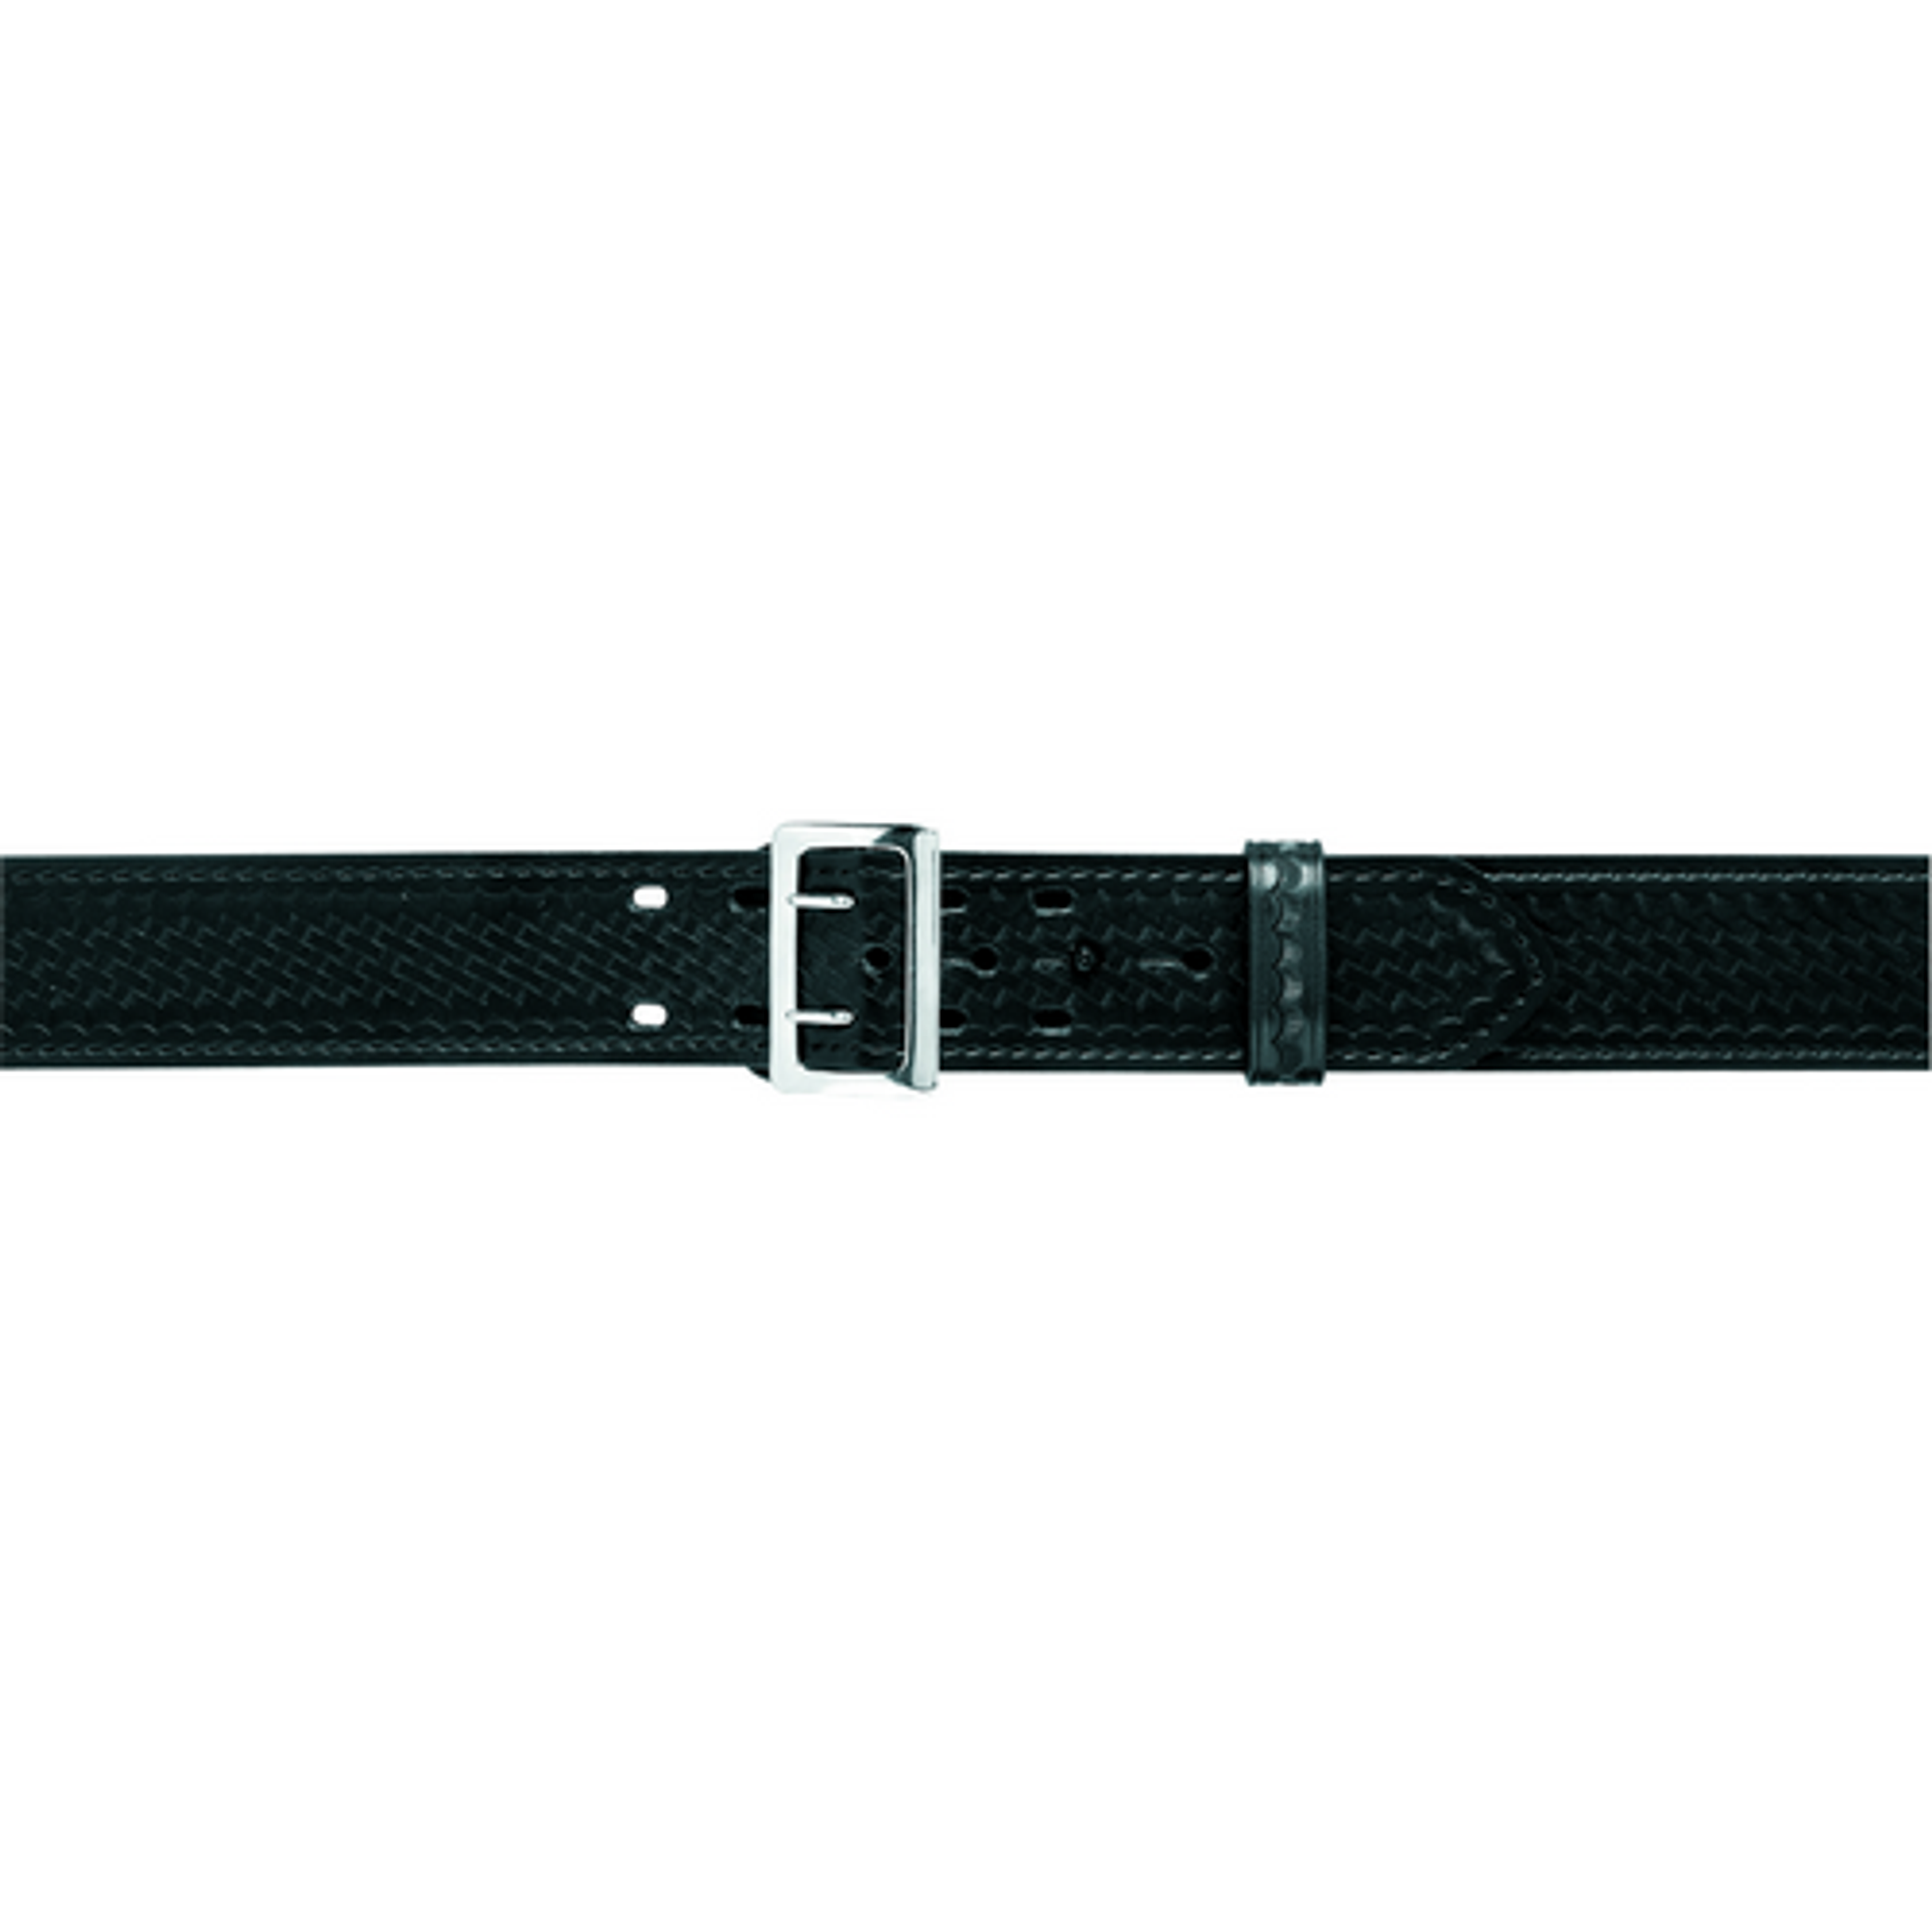 87 - Sam Browne Buckled Duty Belt, 2.25 (58mm) - KR87-48-8